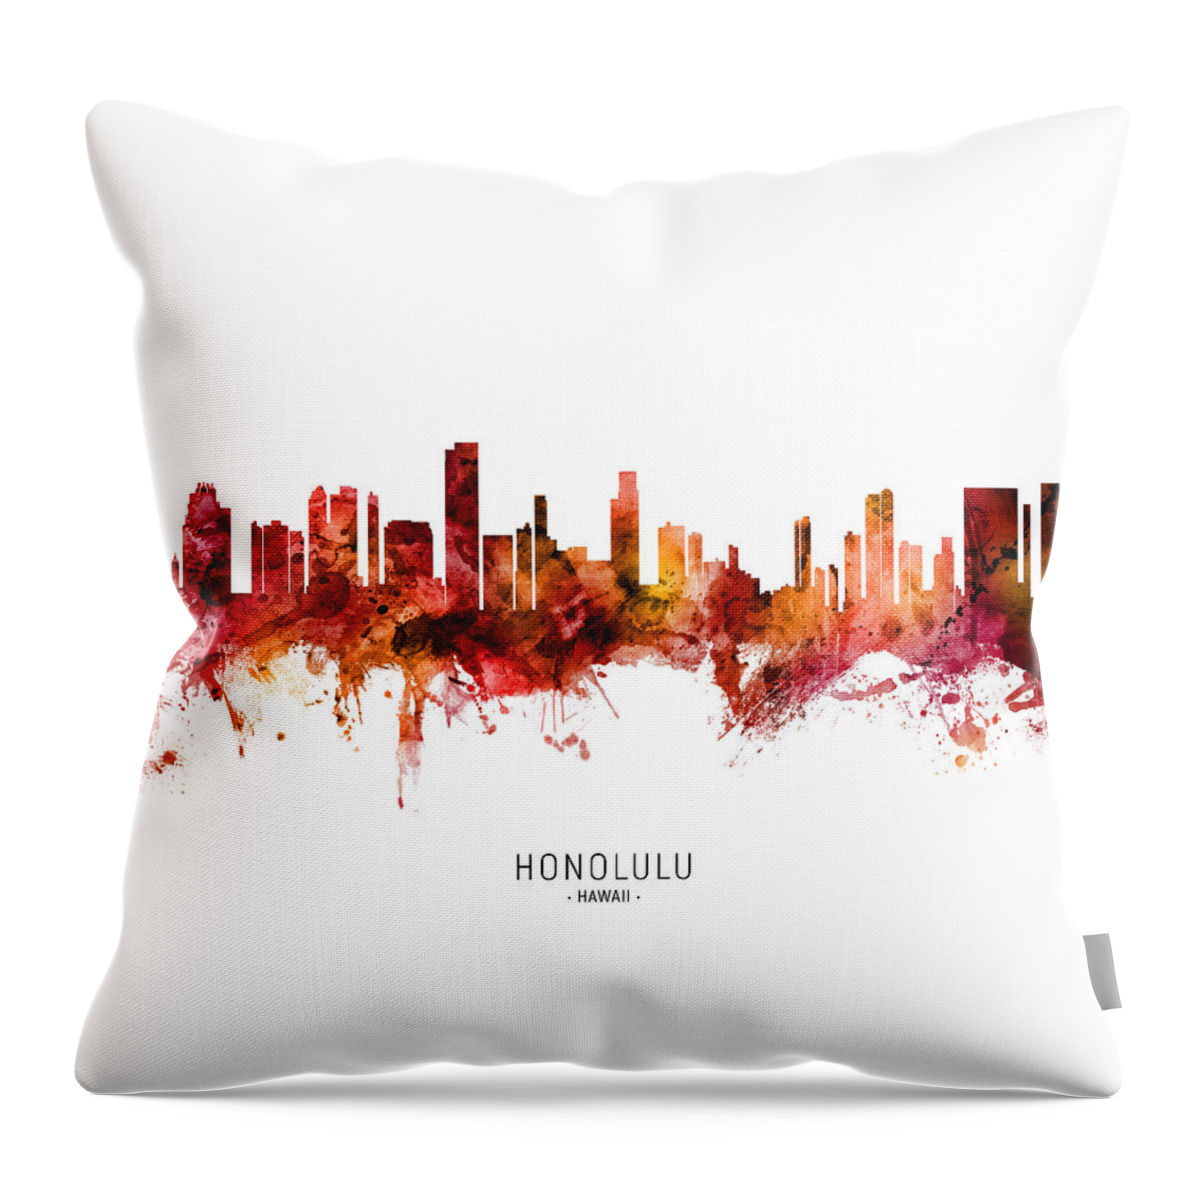 Honolulu Throw Pillow featuring the digital art Honolulu Hawaii Skyline #33 by Michael Tompsett